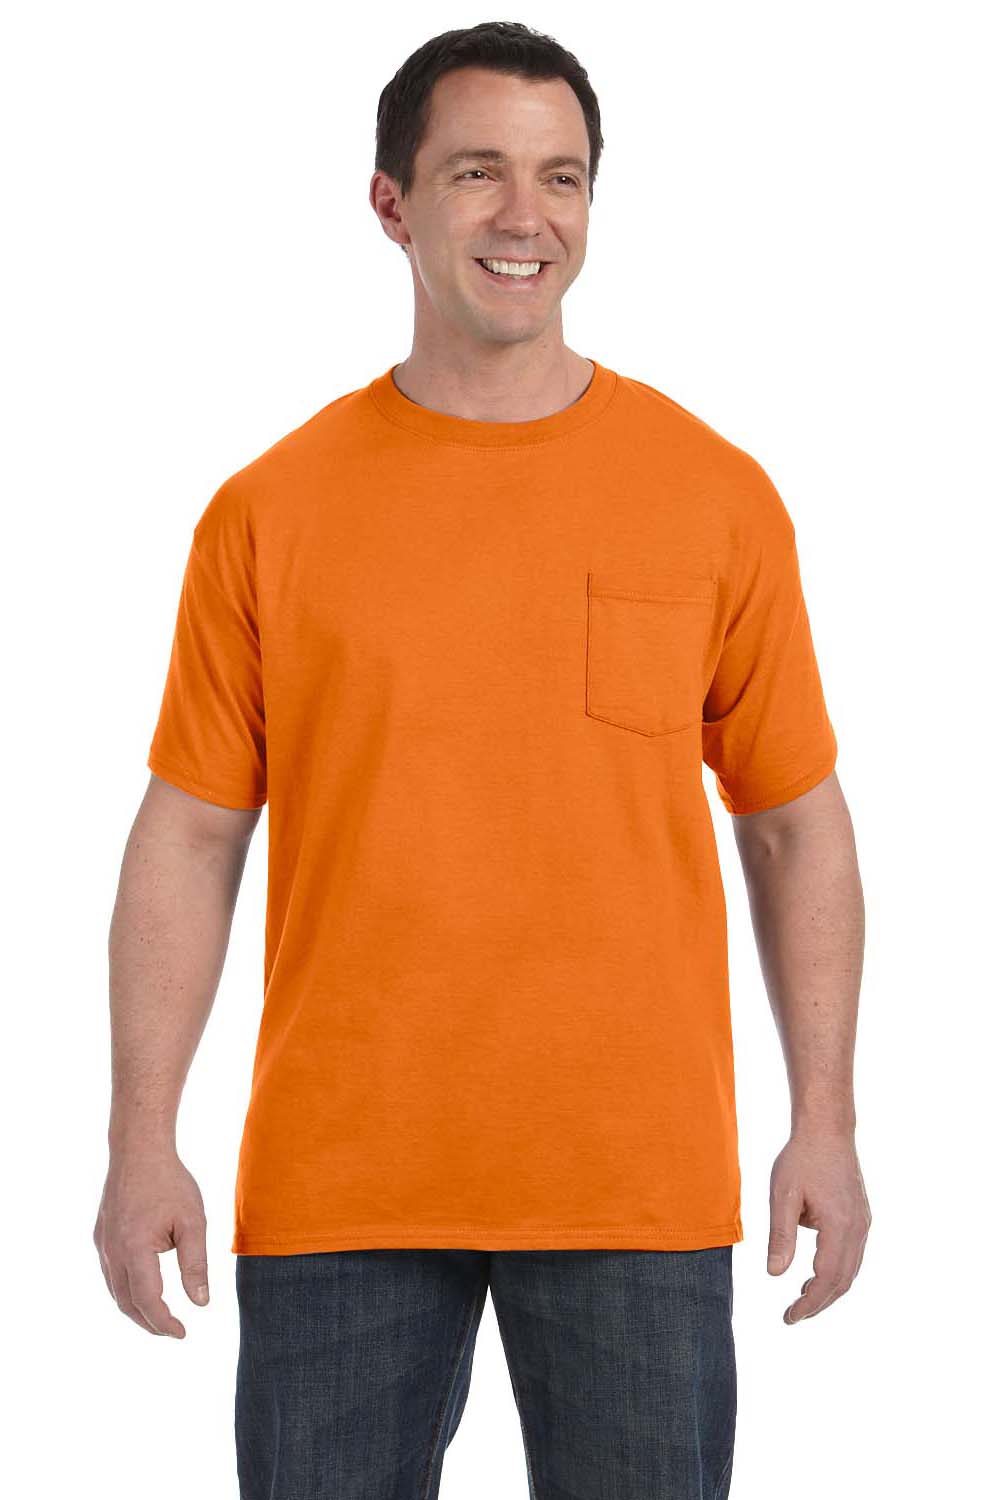 Hanes H5590 Mens ComfortSoft Short Sleeve Crewneck T-Shirt w/ Pocket Orange Front